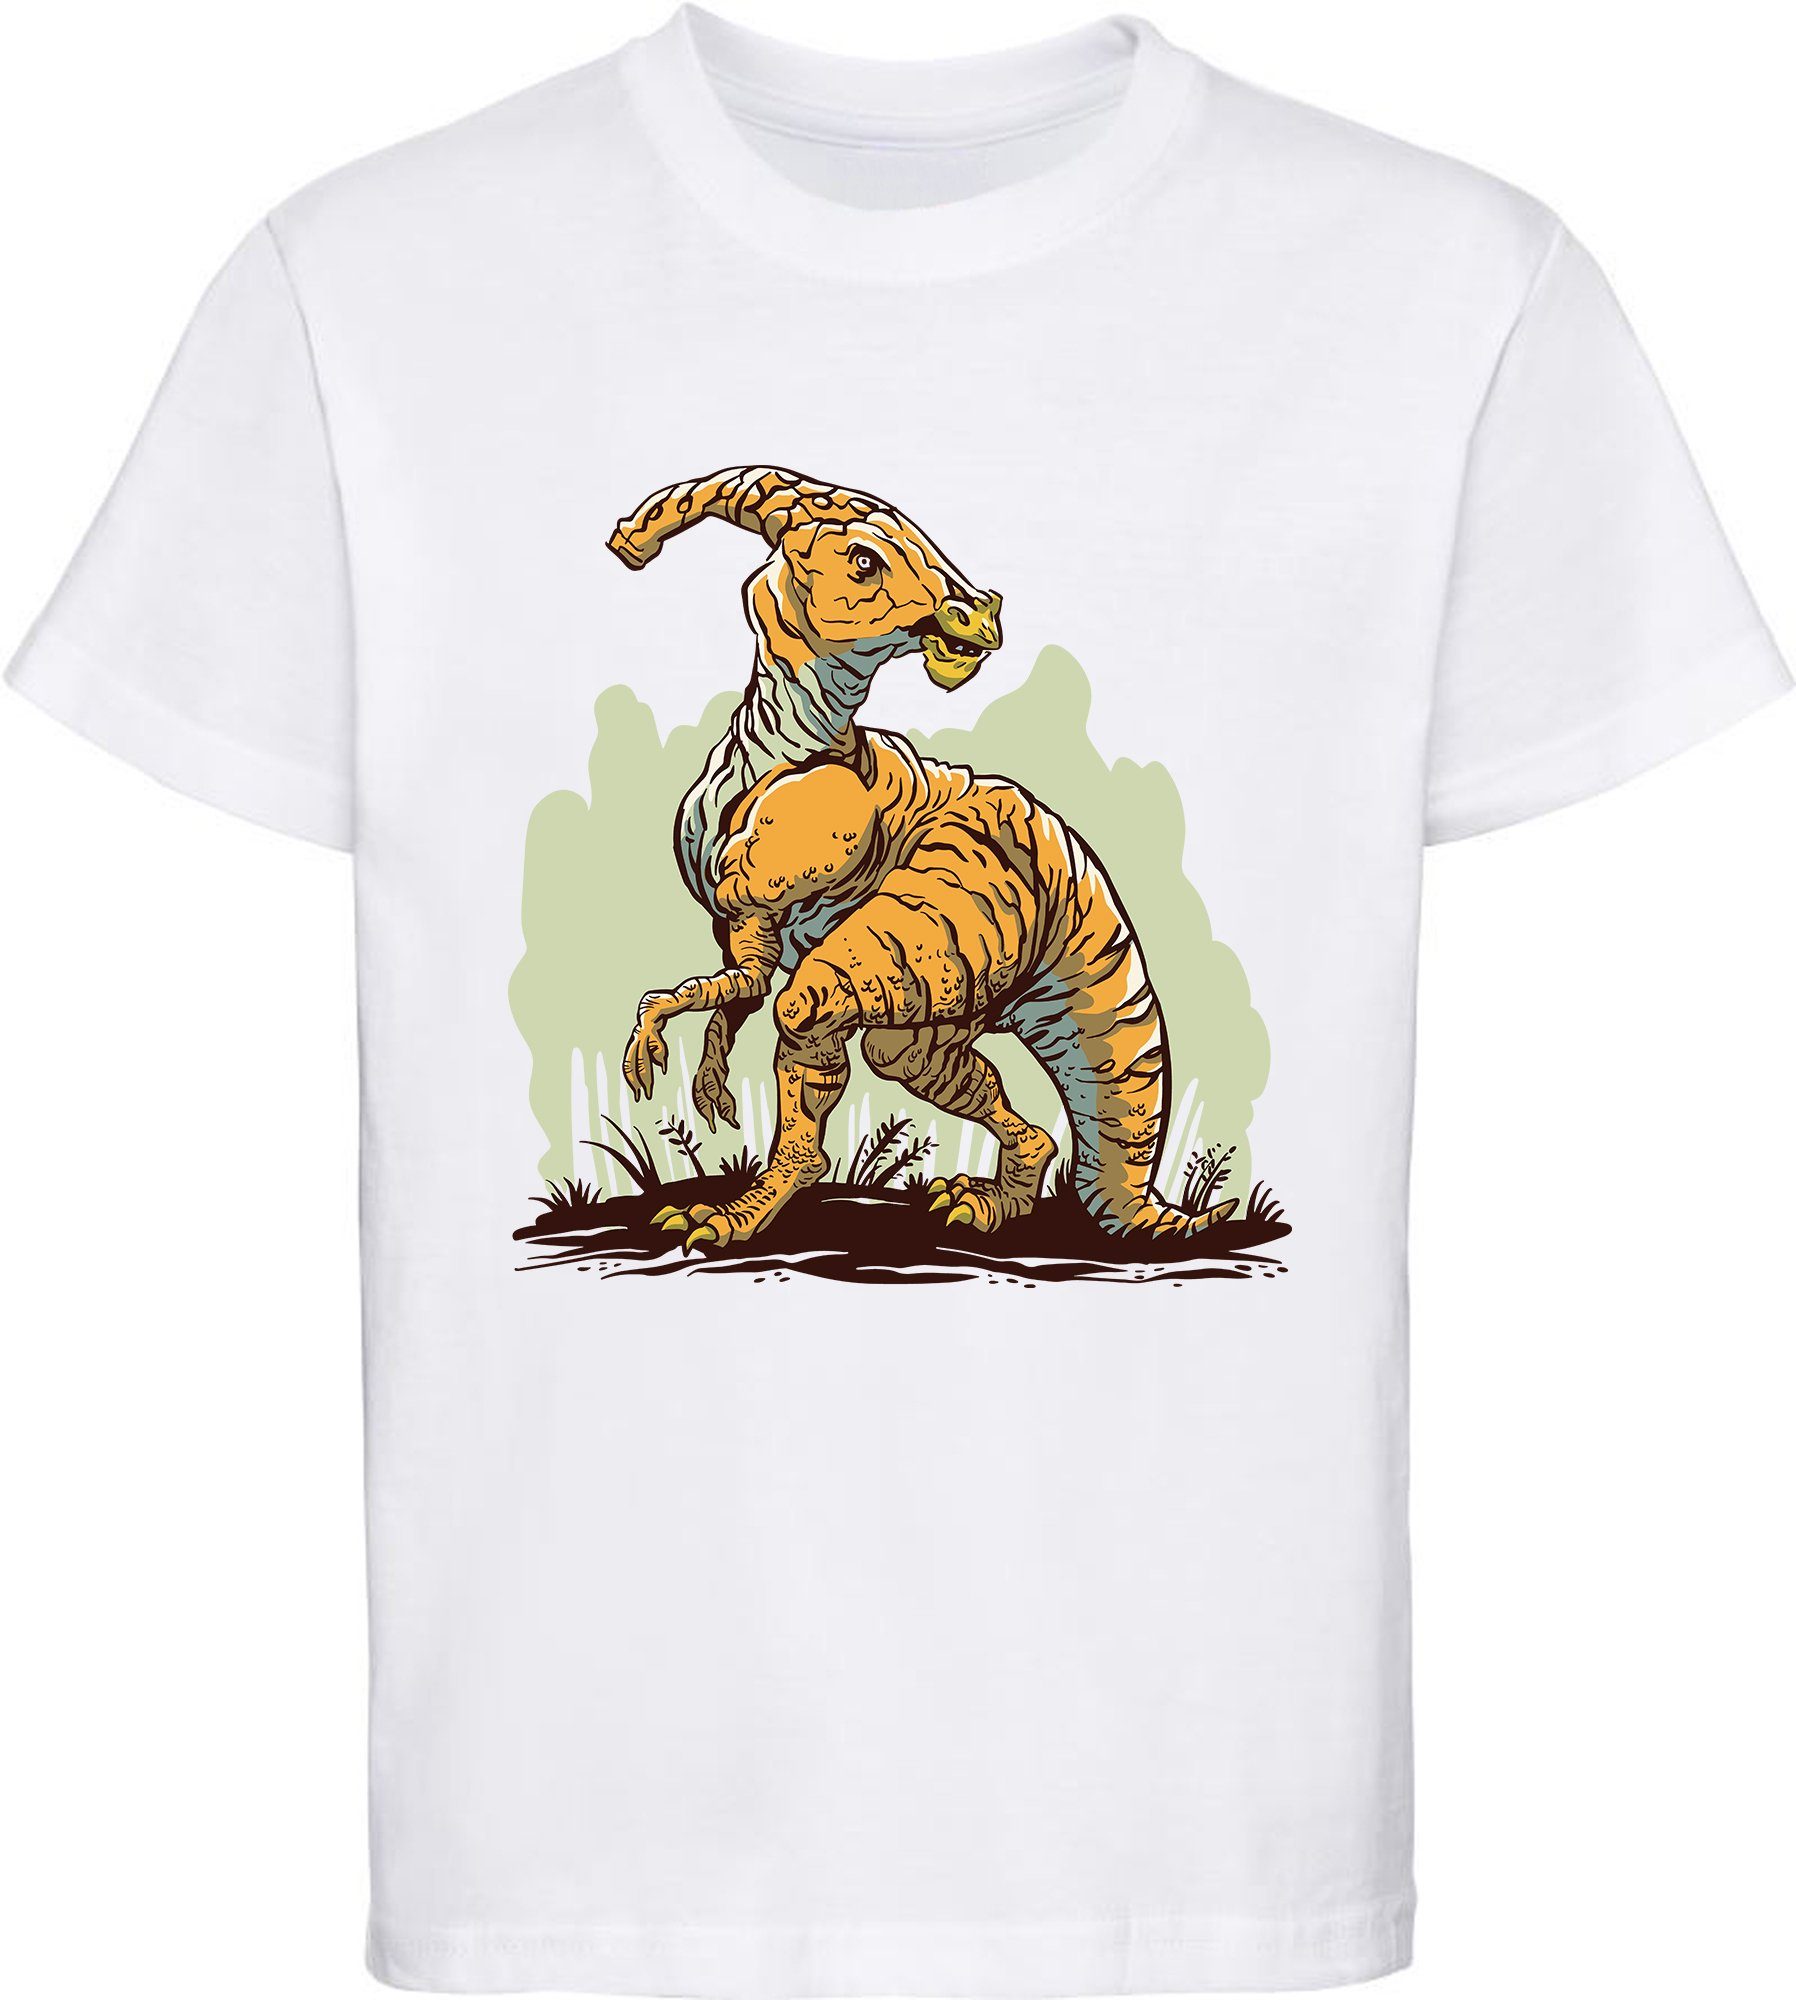 MyDesign24 Kinder weiss bedrucktes schwarz, Dino, weiß, mit T-Shirt Print-Shirt Parasaurolophus blau, i99 Baumwollshirt rot,